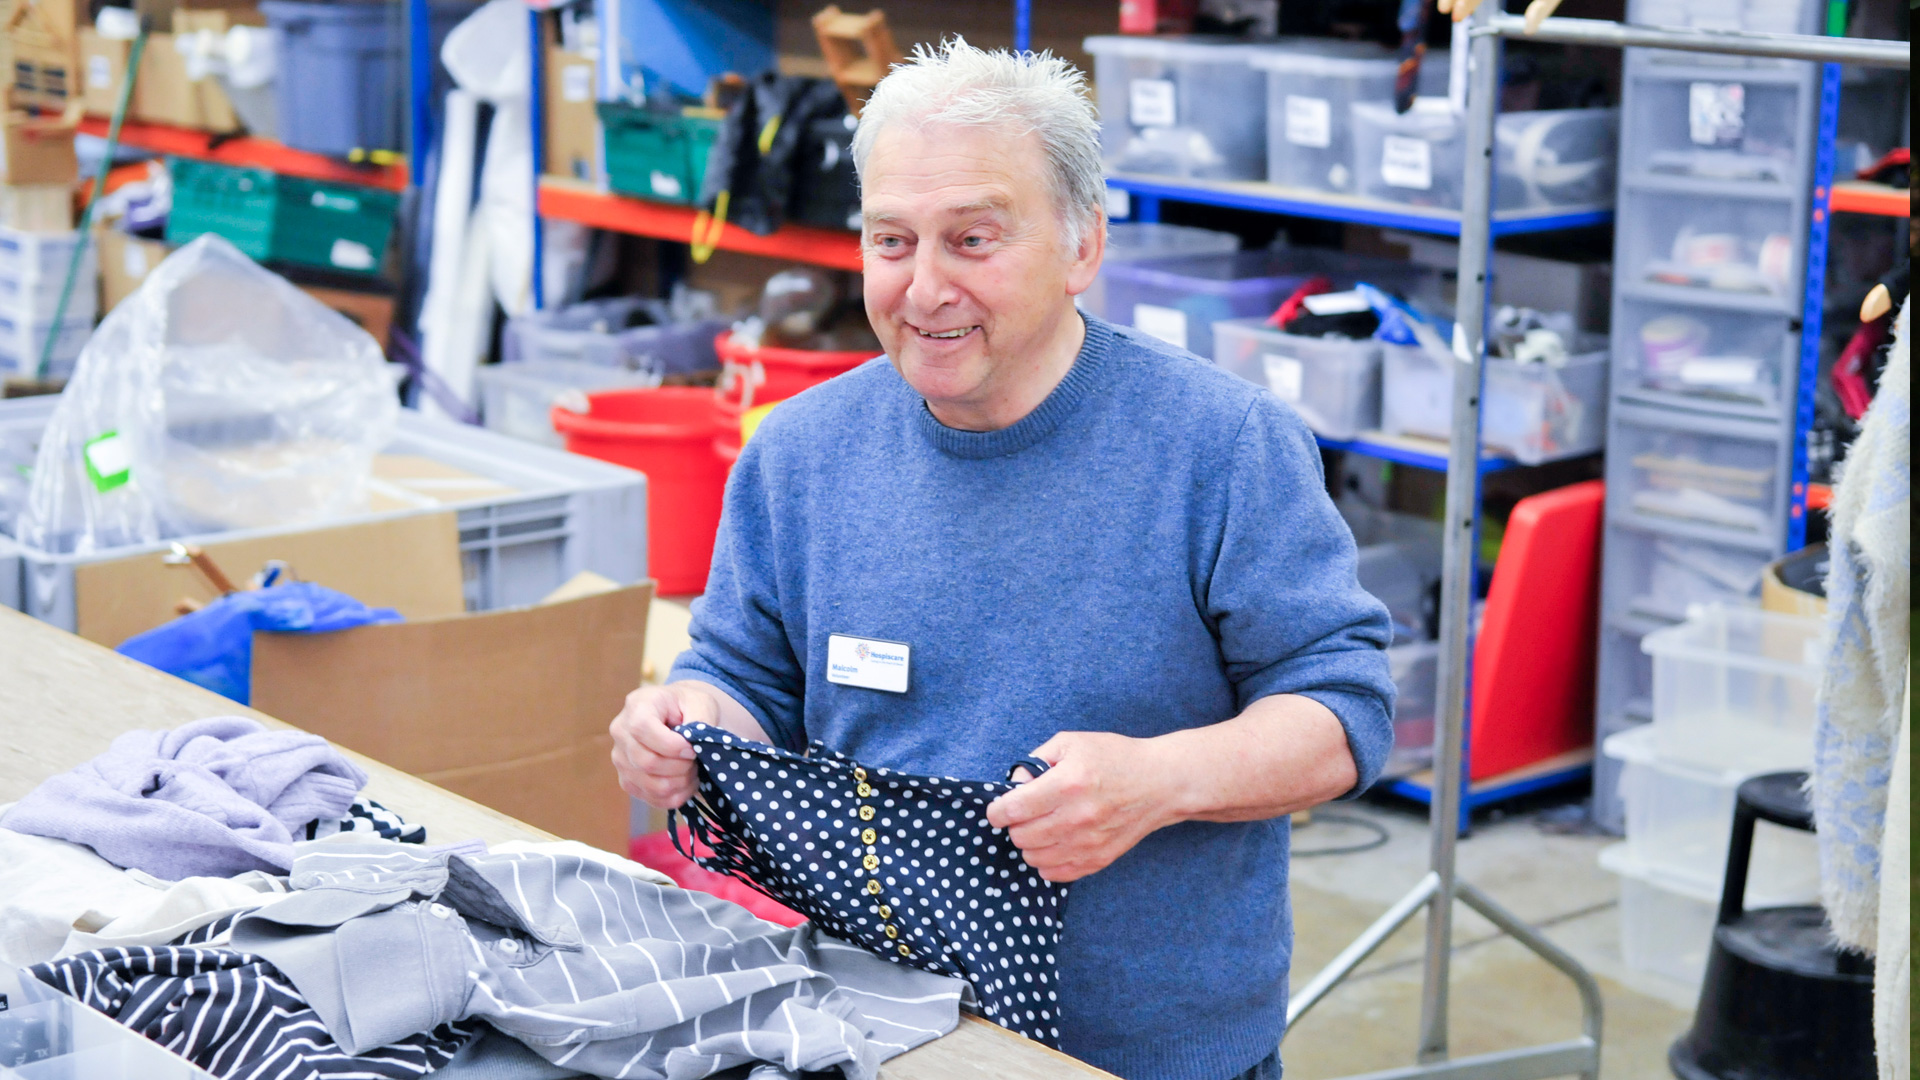 Twelve unusual volunteer roles at the Hospiscare Warehouse